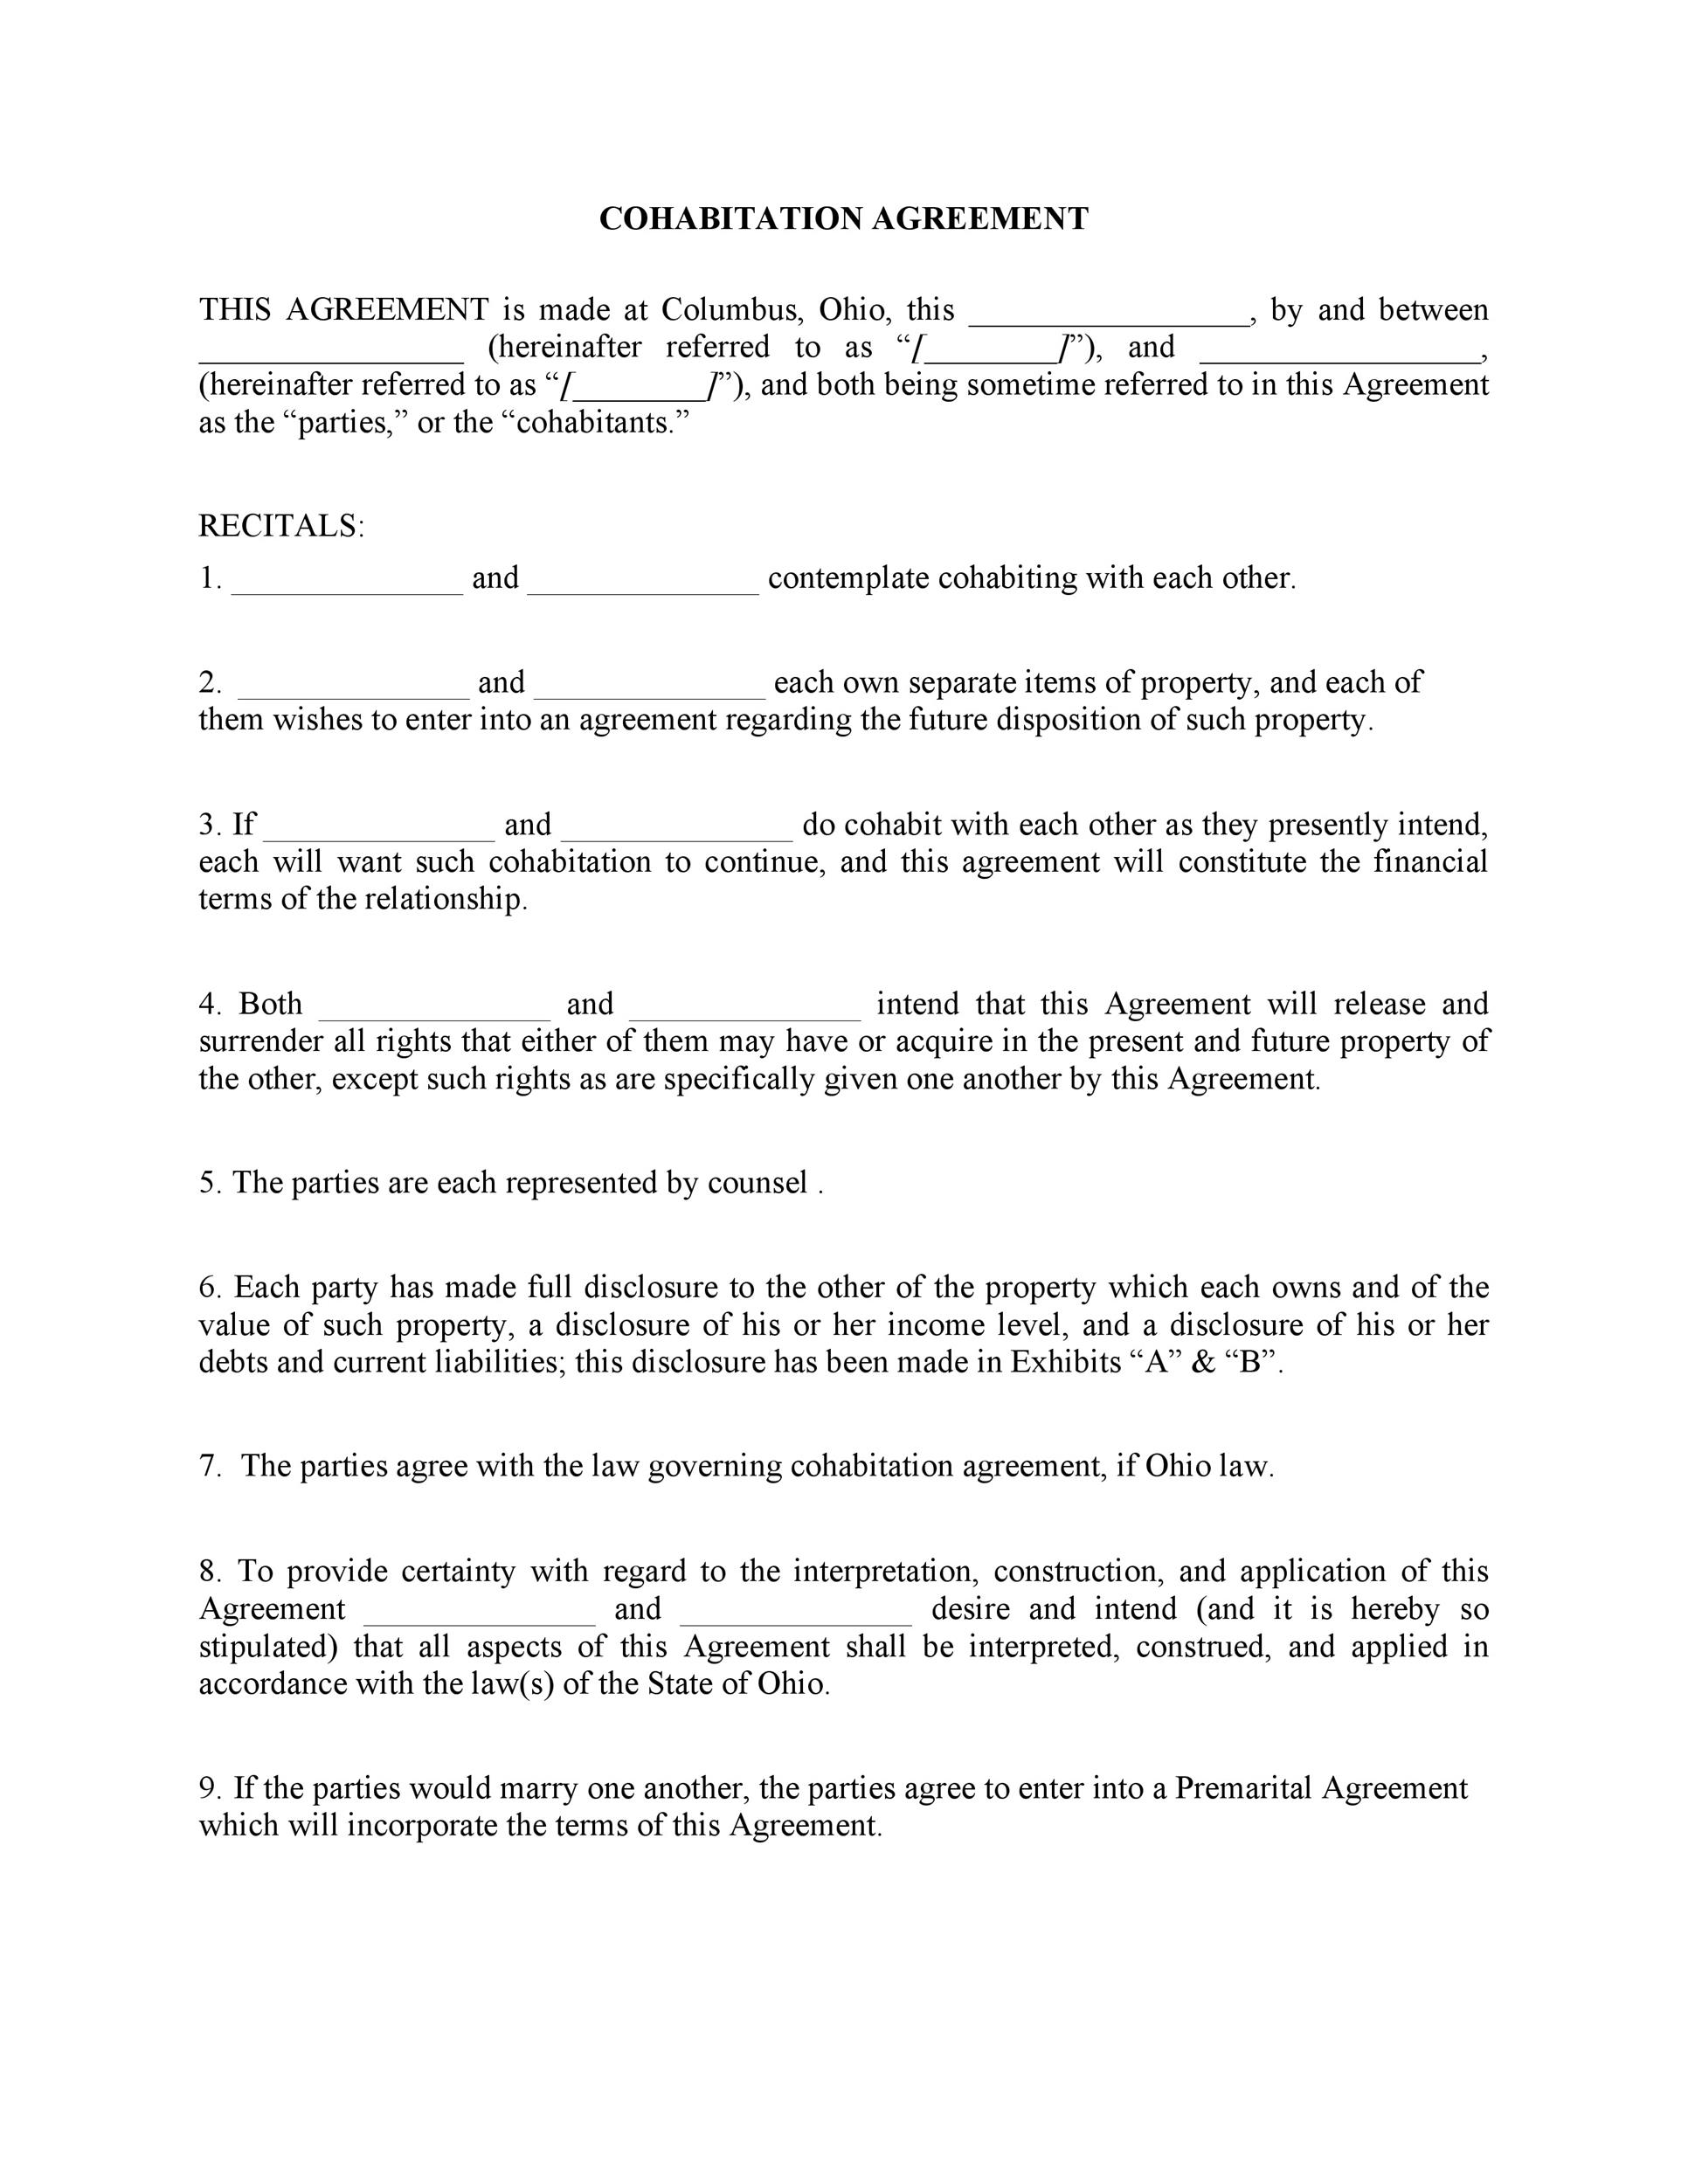 Cohabitation Agreement Forms